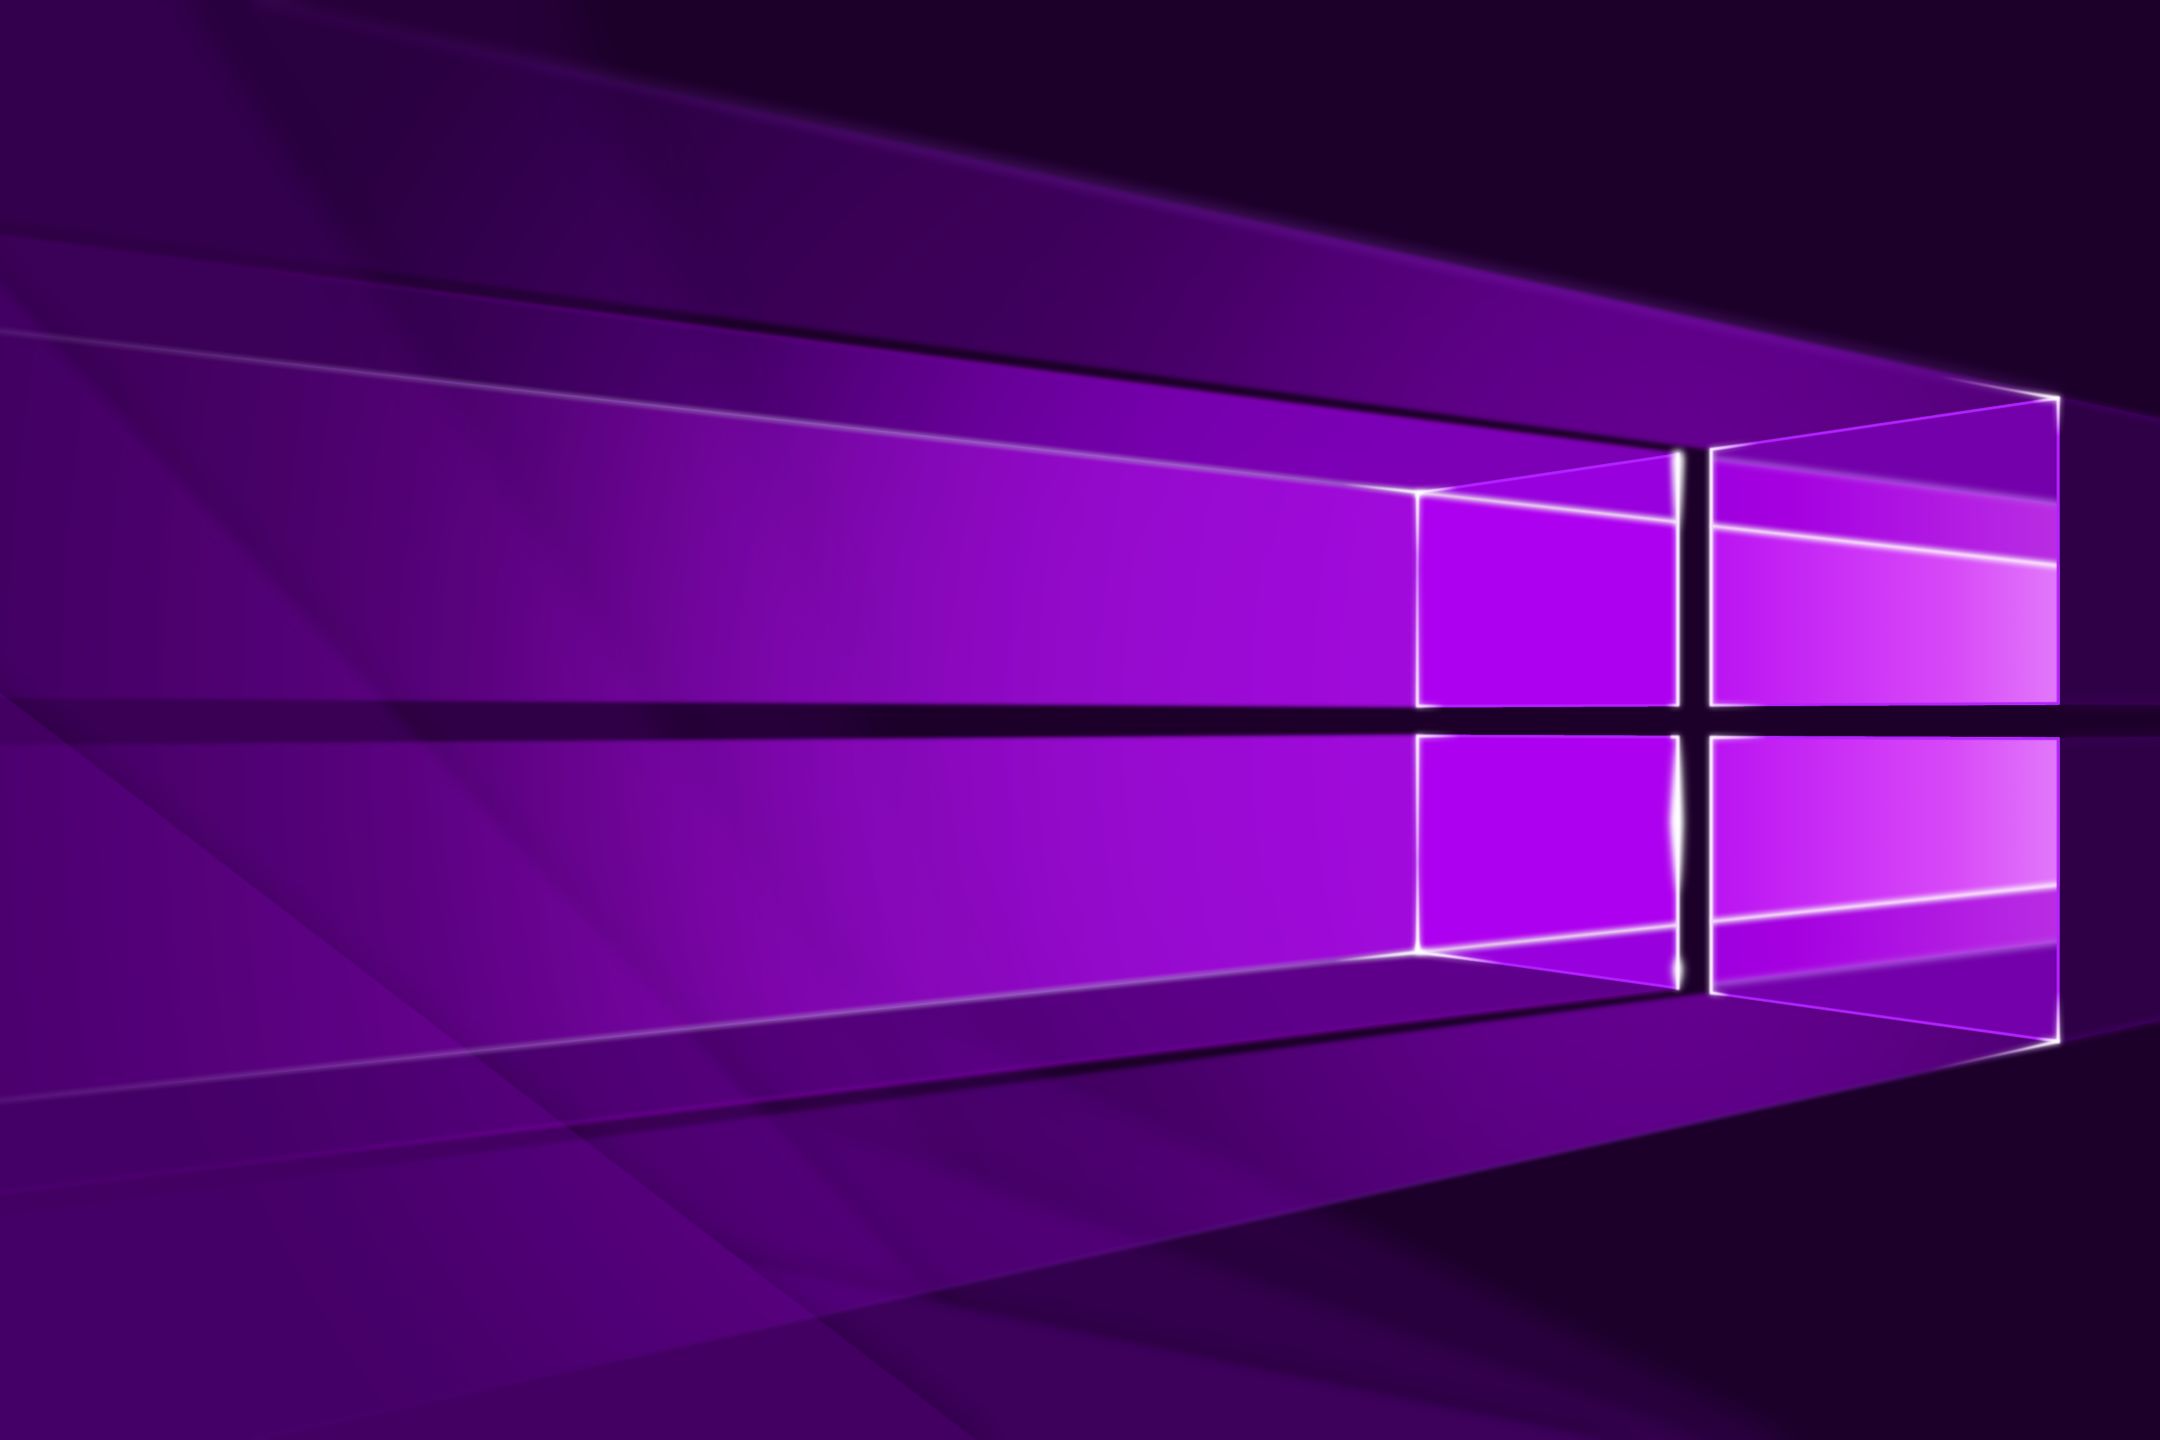 Windows 10 1920x1080 Wallpapers - Top Free Windows 10 1920x1080 ...